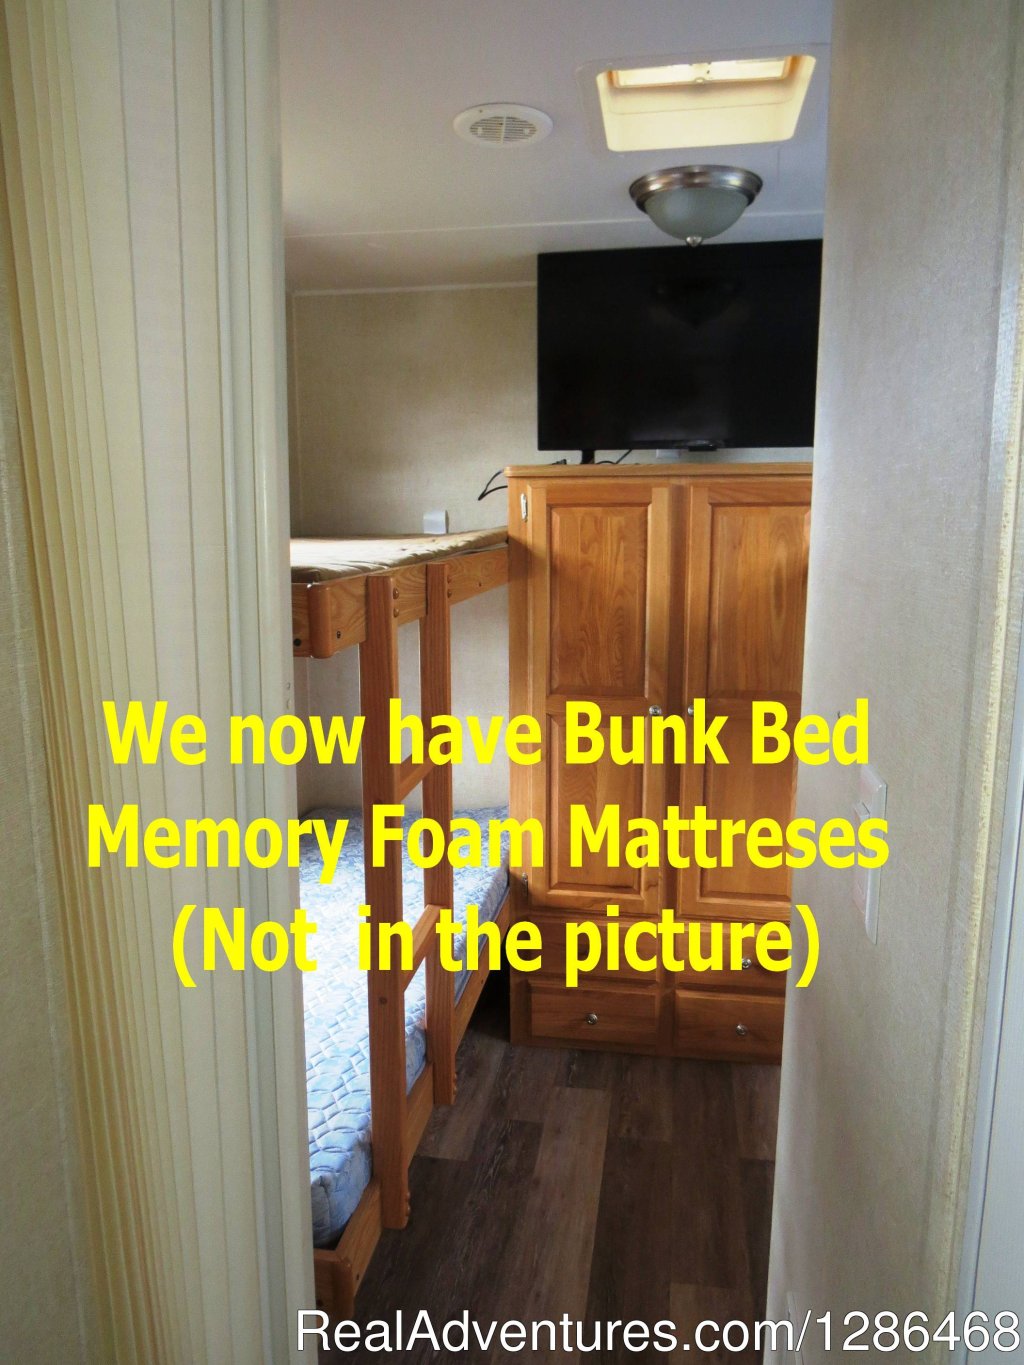 Bunk Bed Room has 4 bunks | Making Memories with BoardwalkRVrentals | Image #3/8 | 